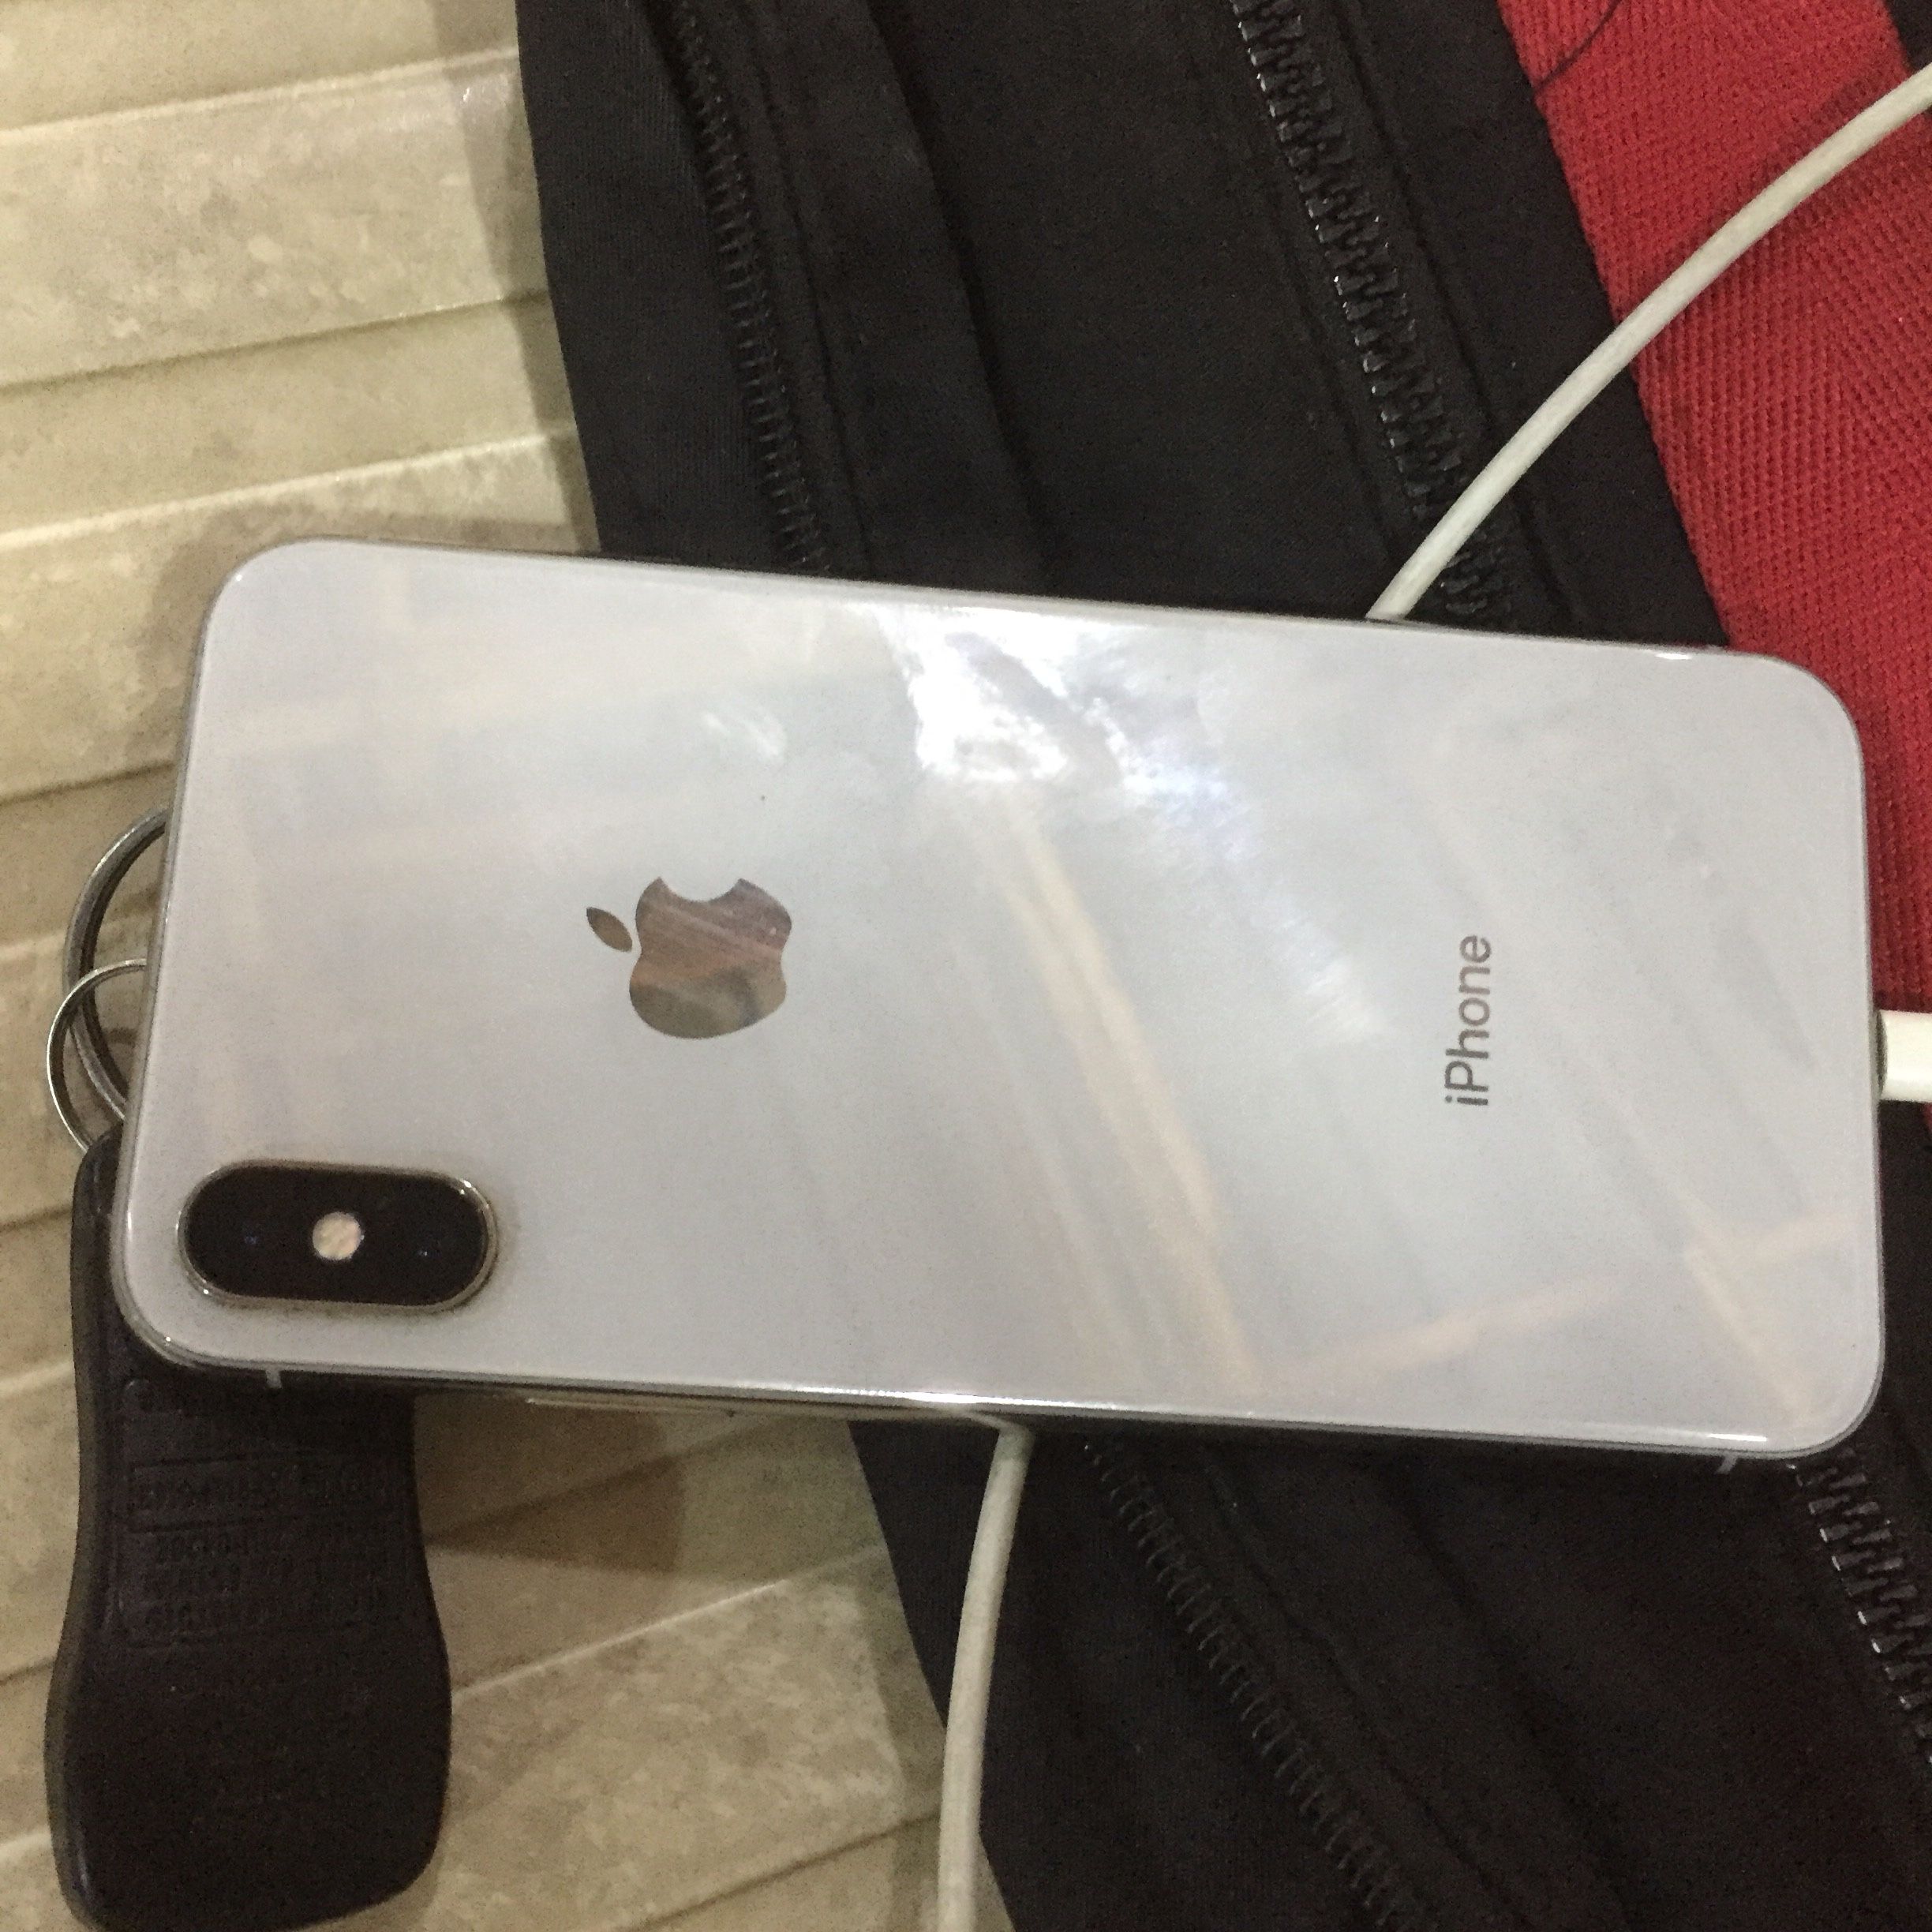 Apple iPhone X - 64GB - Silver (Unlocked) A1901 (GSM) (CA)